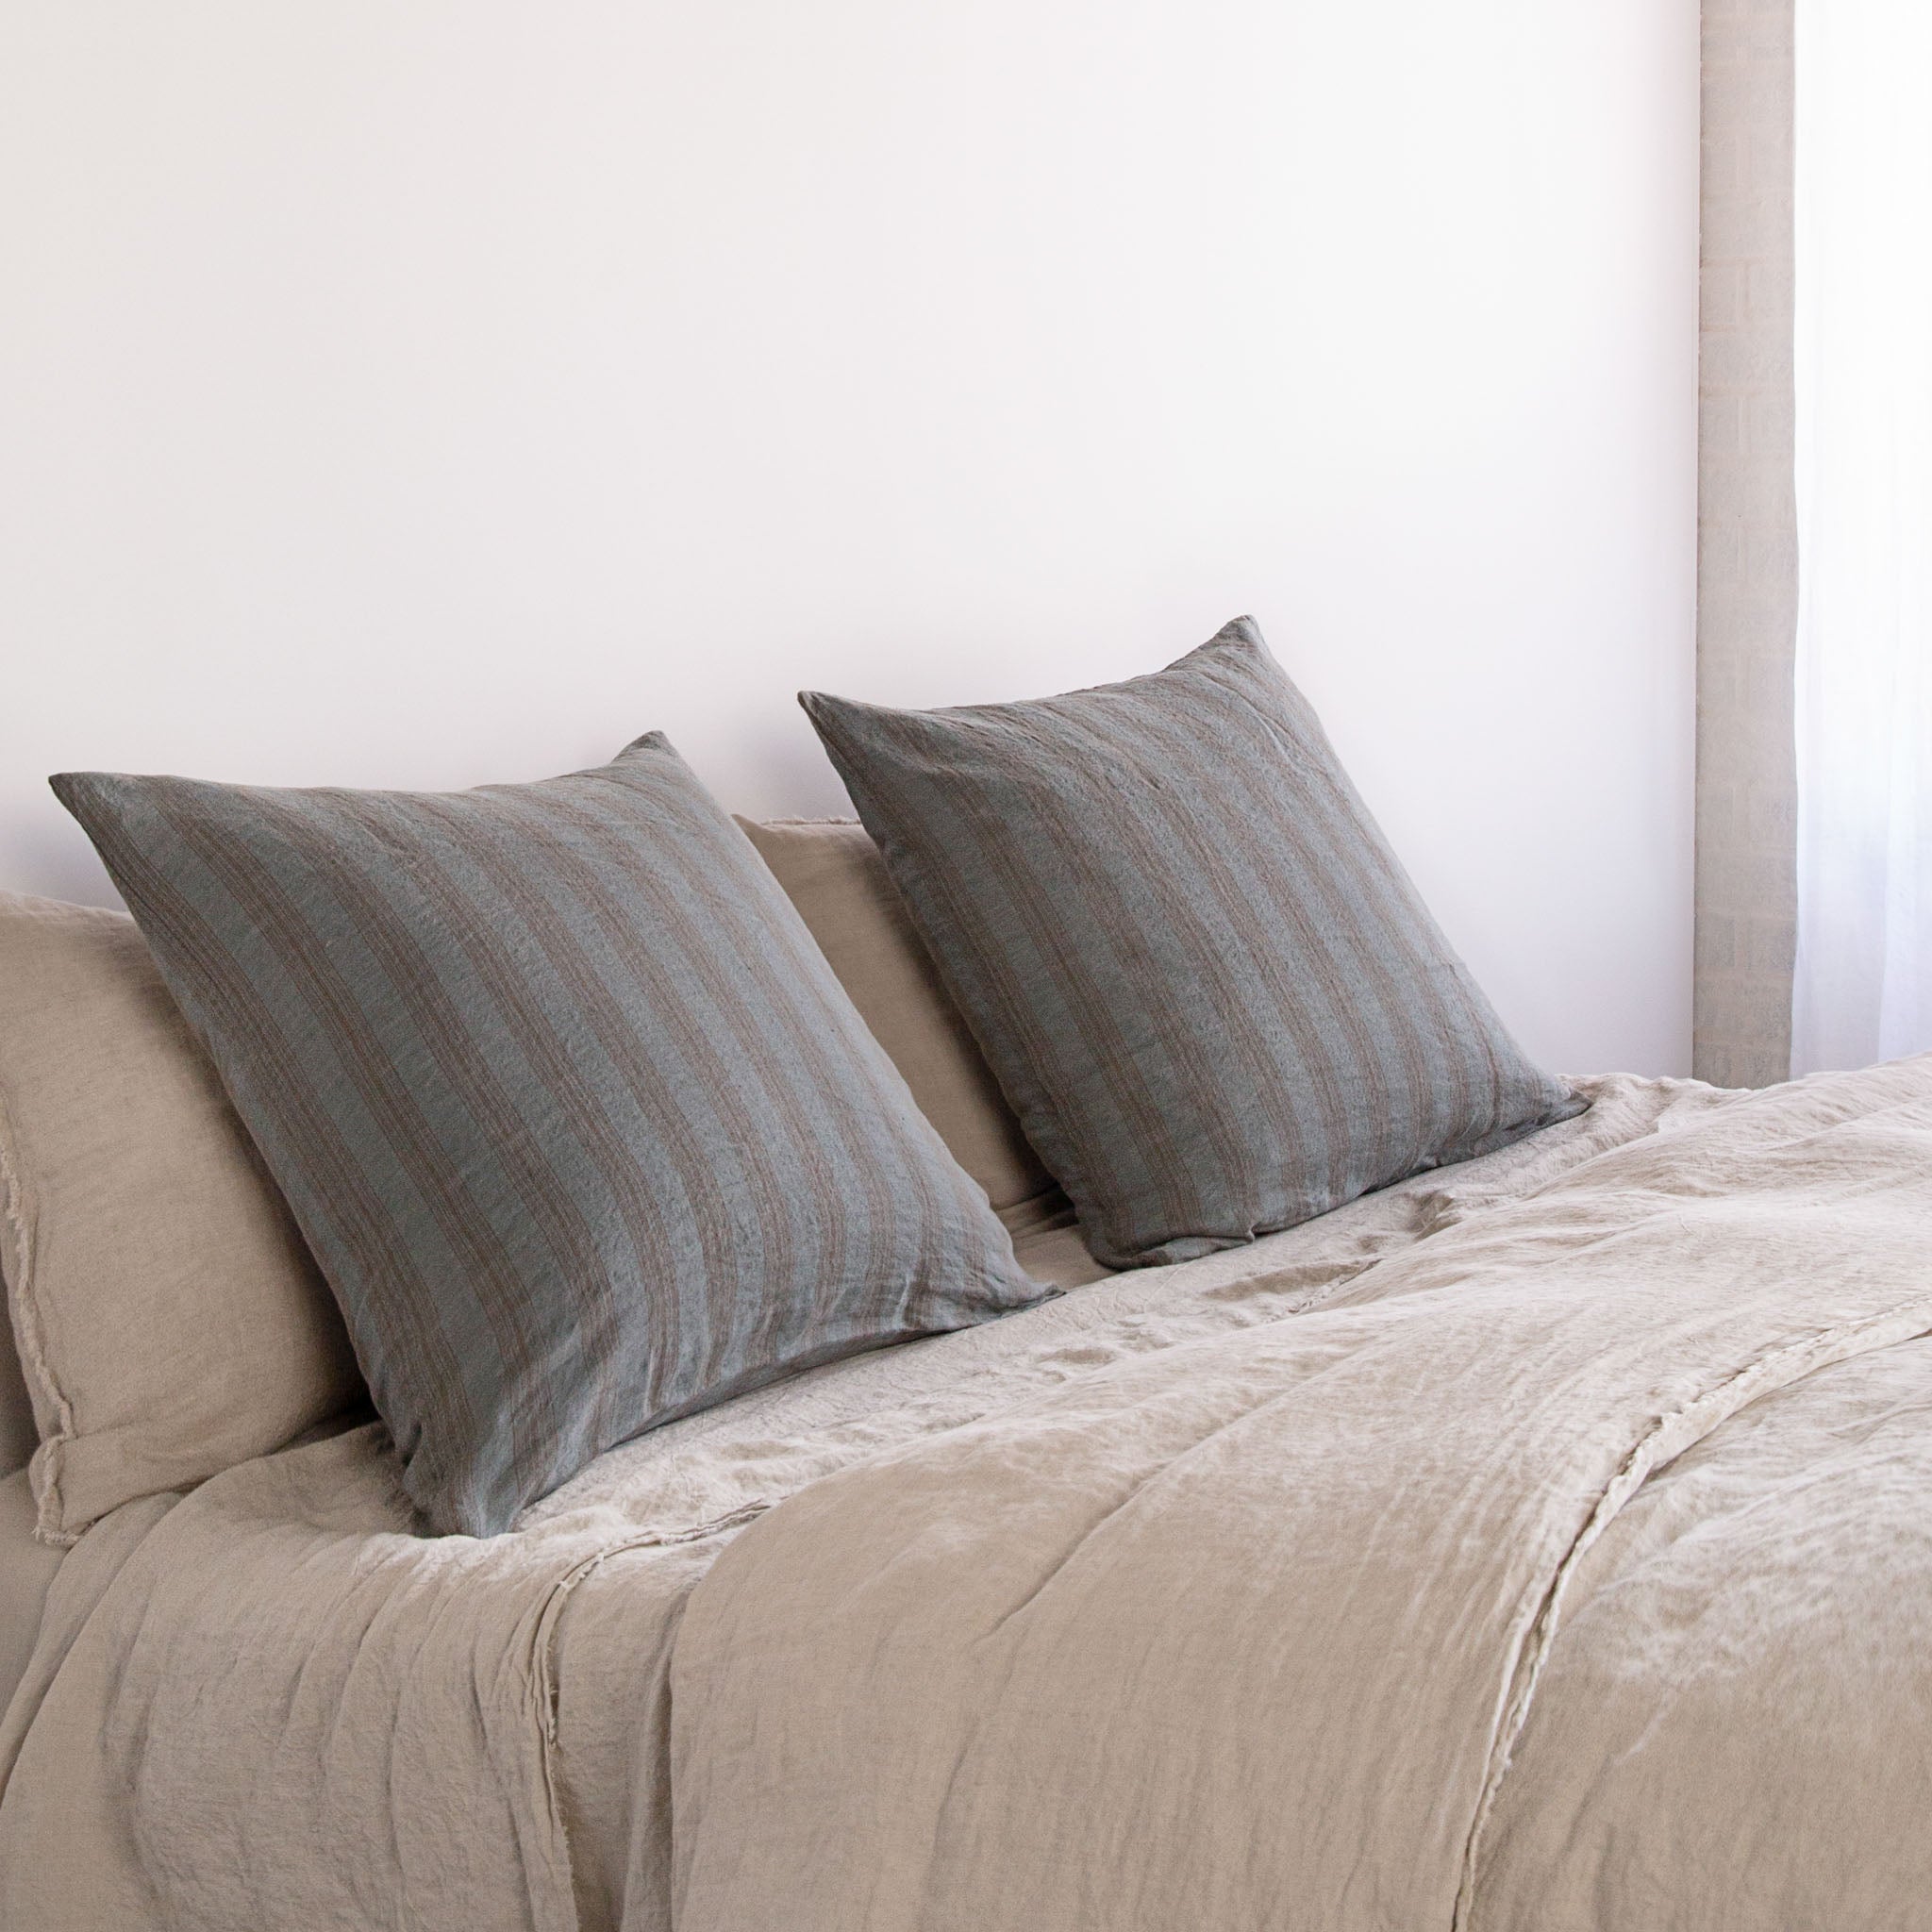 European Linen Pillowcases | Teal & Brown  | Hale Mercantile Co.